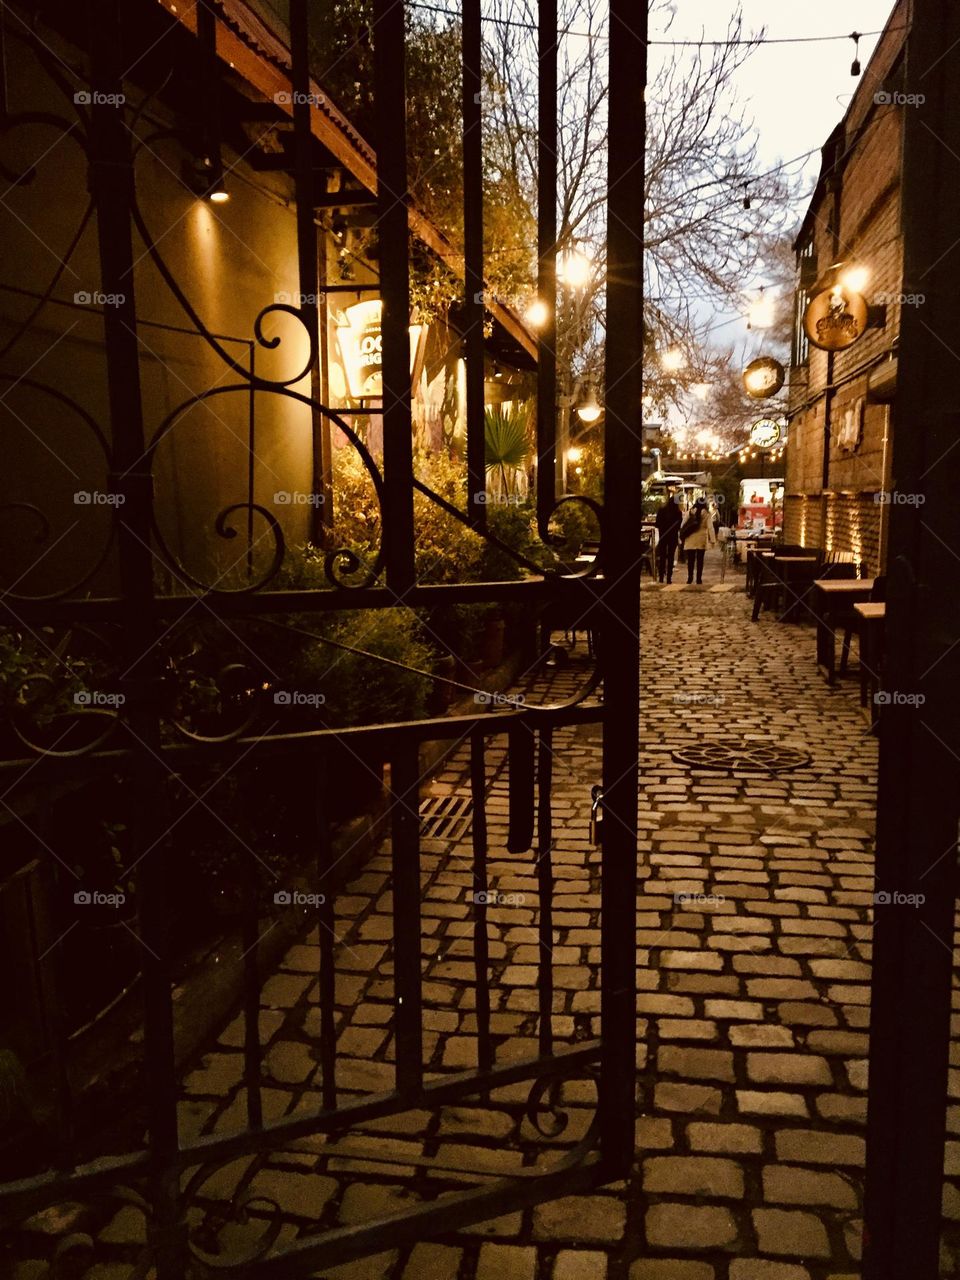 Passage through metallic door into cobblestones paved road in Providencia, Santiago, Chile by night 